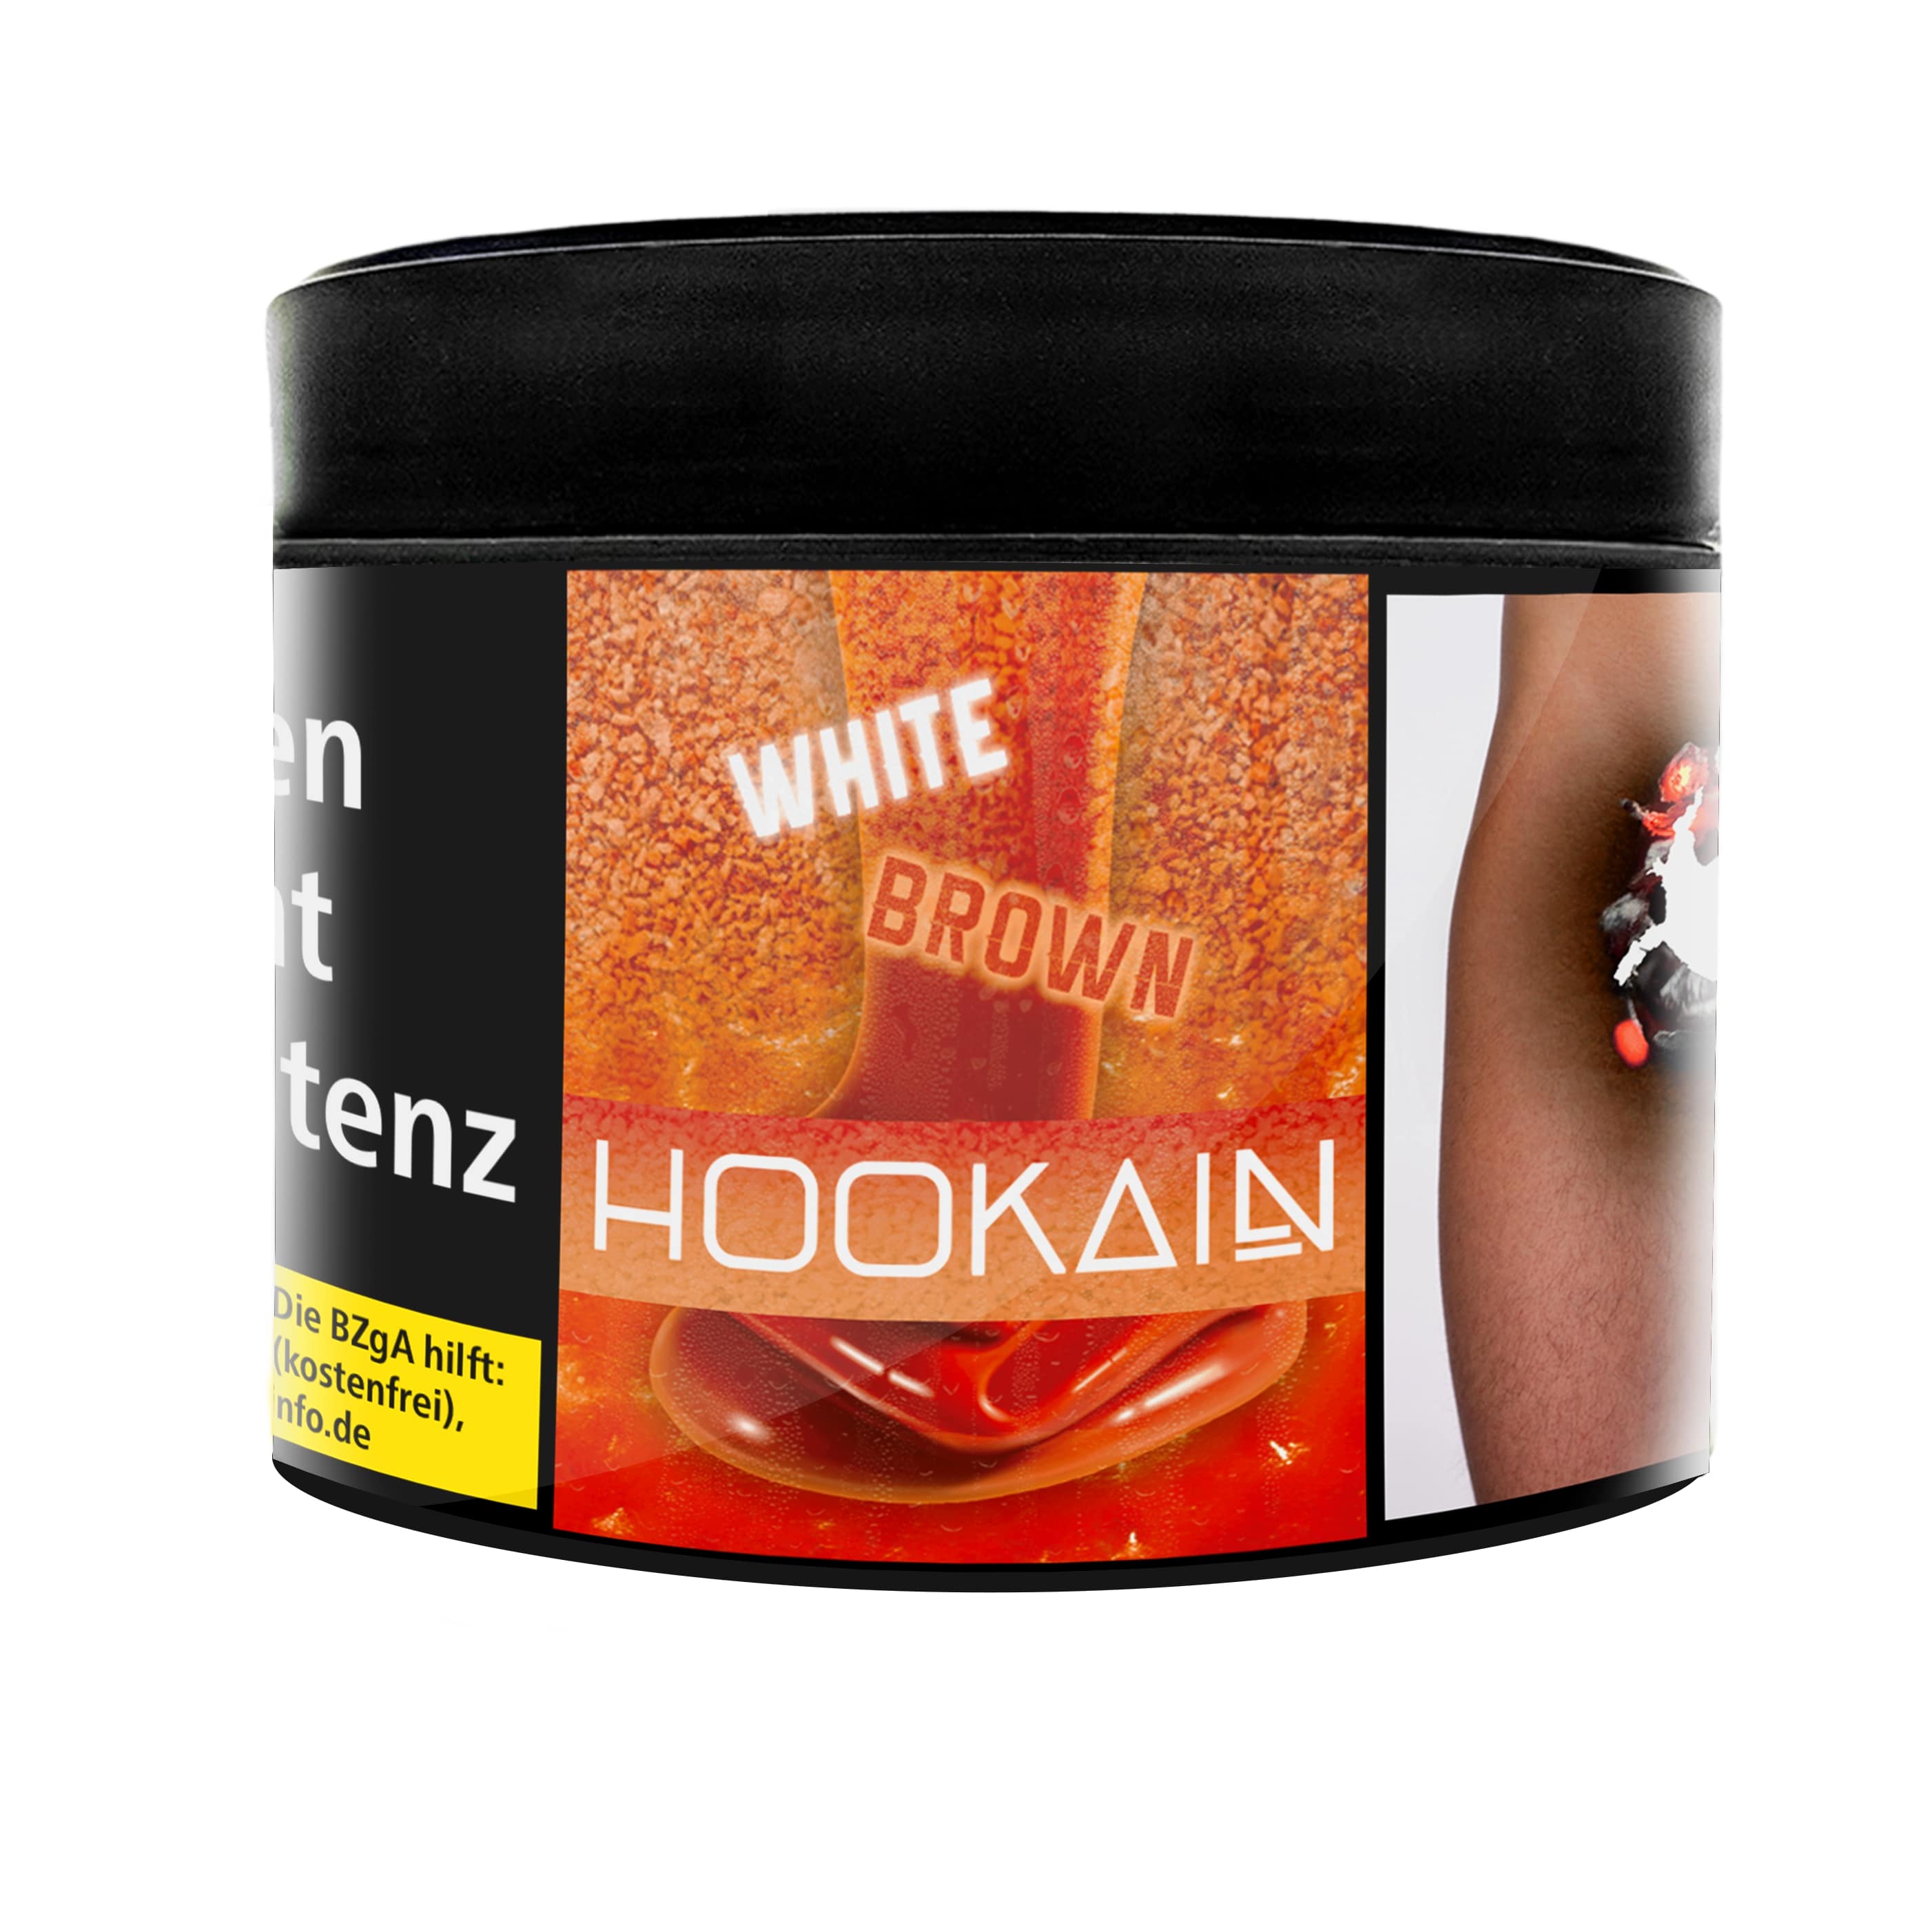 Hookain White Brown 200g